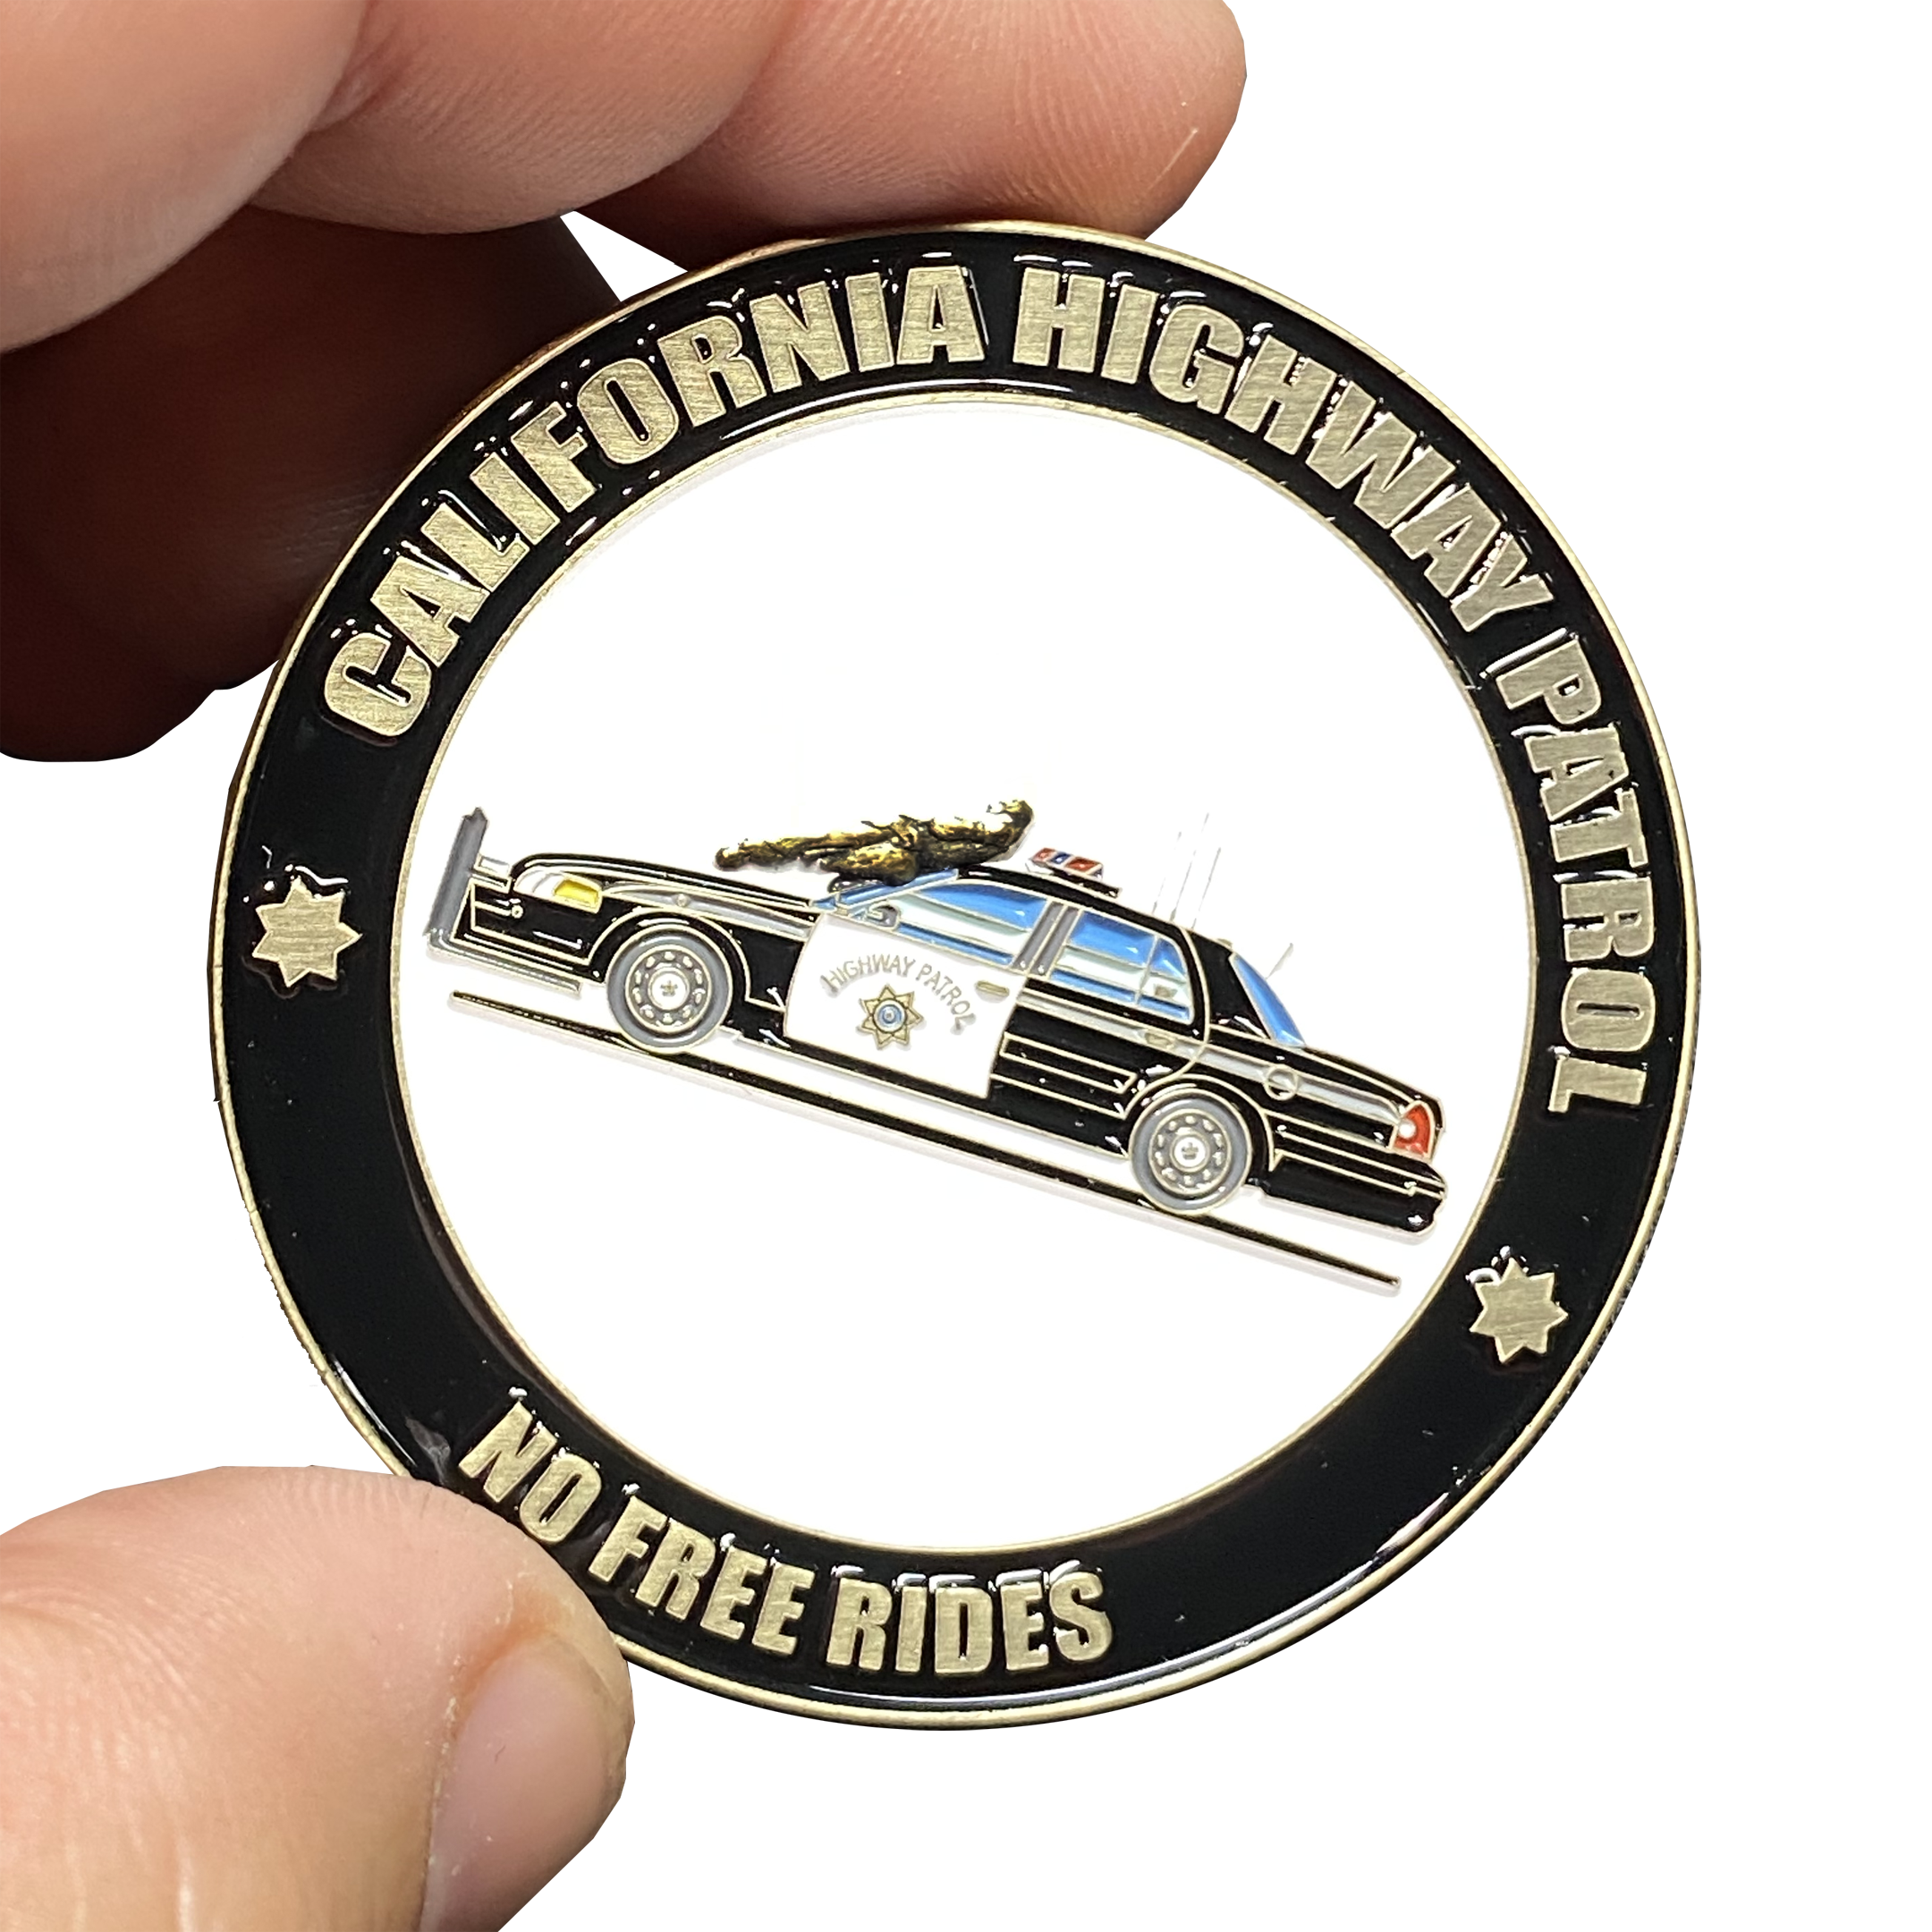 Super Bowl 56 LVI California HWY Patrol CHP Police Challenge Coin LA Rams🏈  Kupp